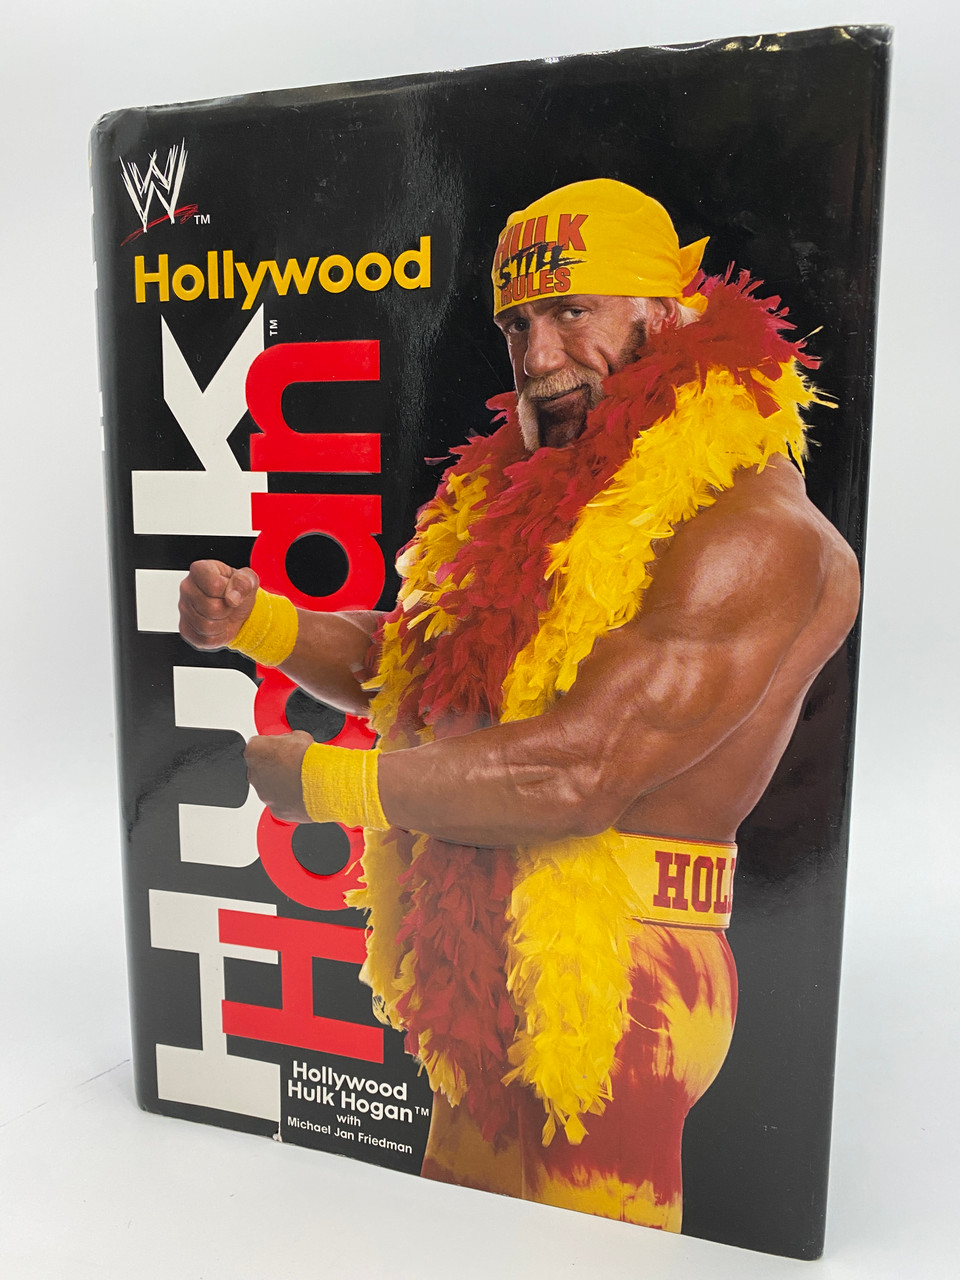 Hollywood Hulk Hogan - Hulk Hogan (Signed Book)